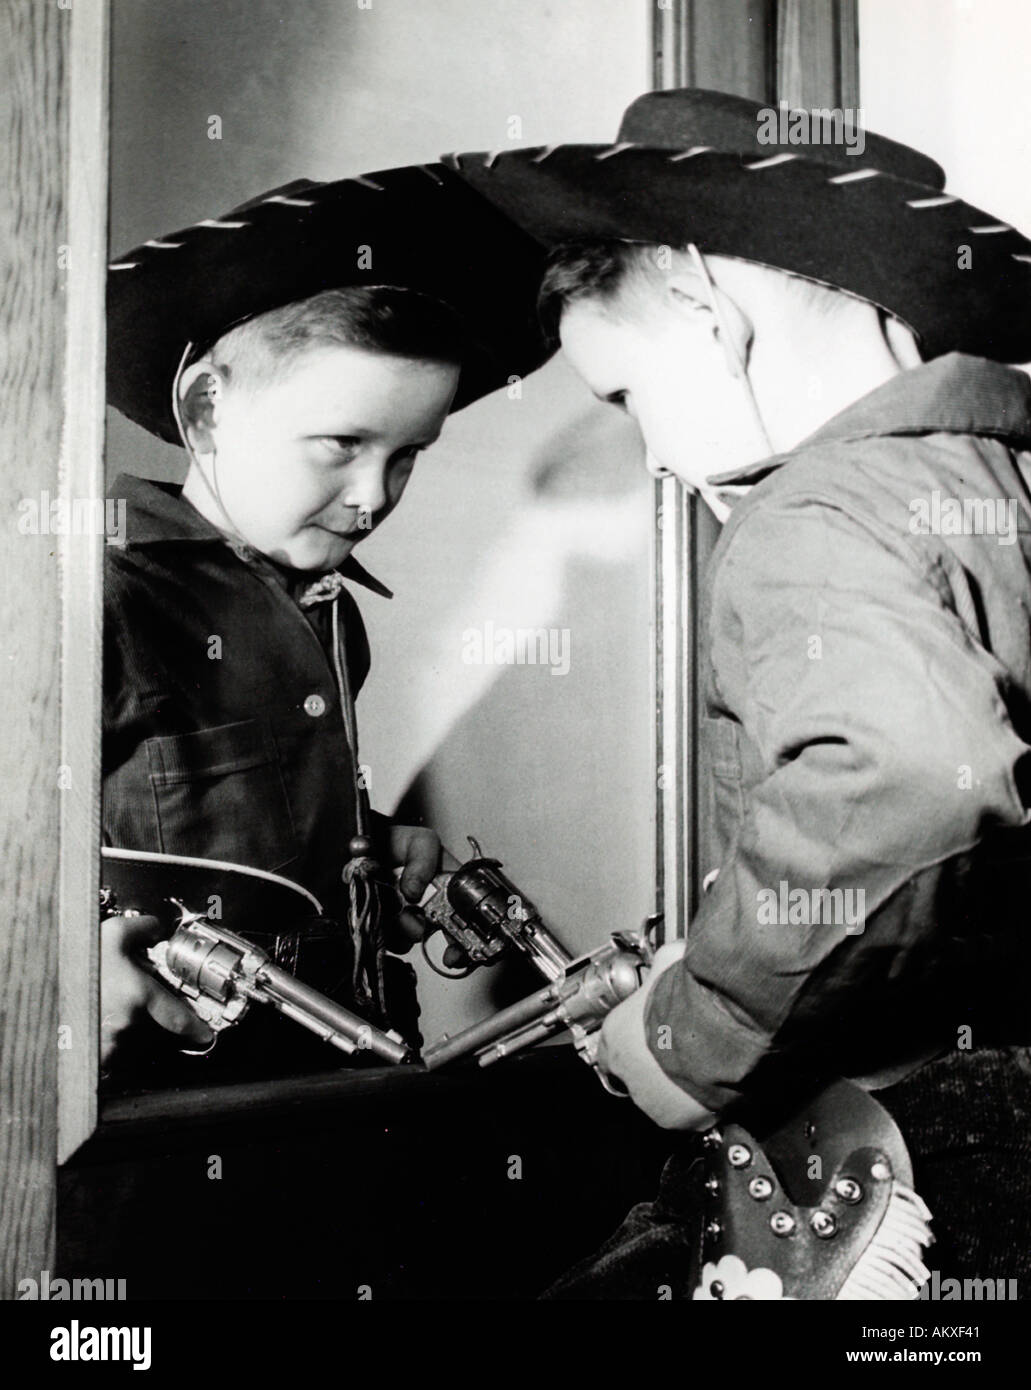 young-boy-in-cowboy-suit-pondering-his-image-in-mirror-1950-s-AKXF41.jpg